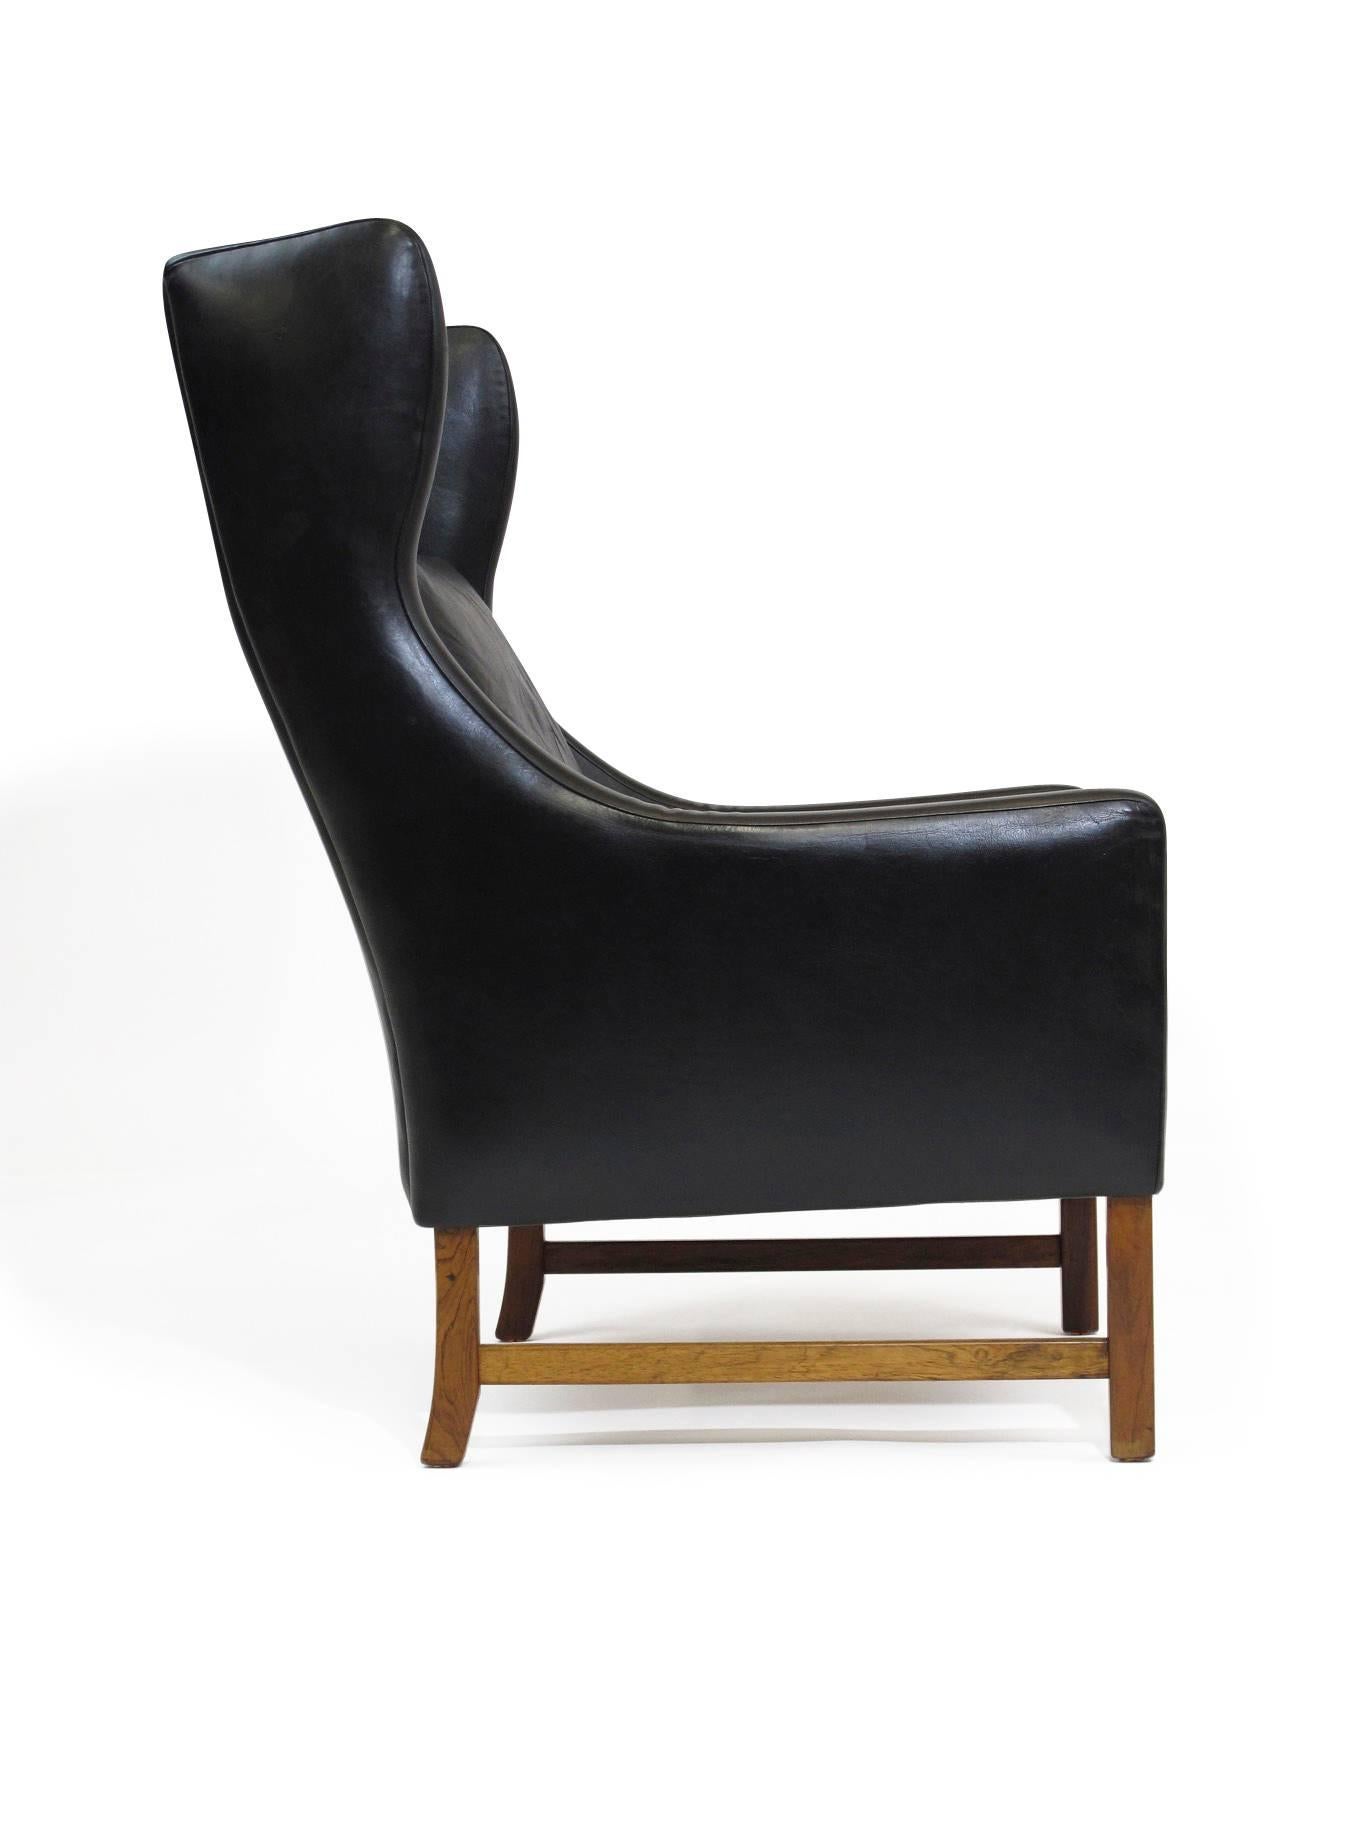 Oiled Fredrik Kayser Rosewood and Black Leather High-Back Danish Lounge Chair